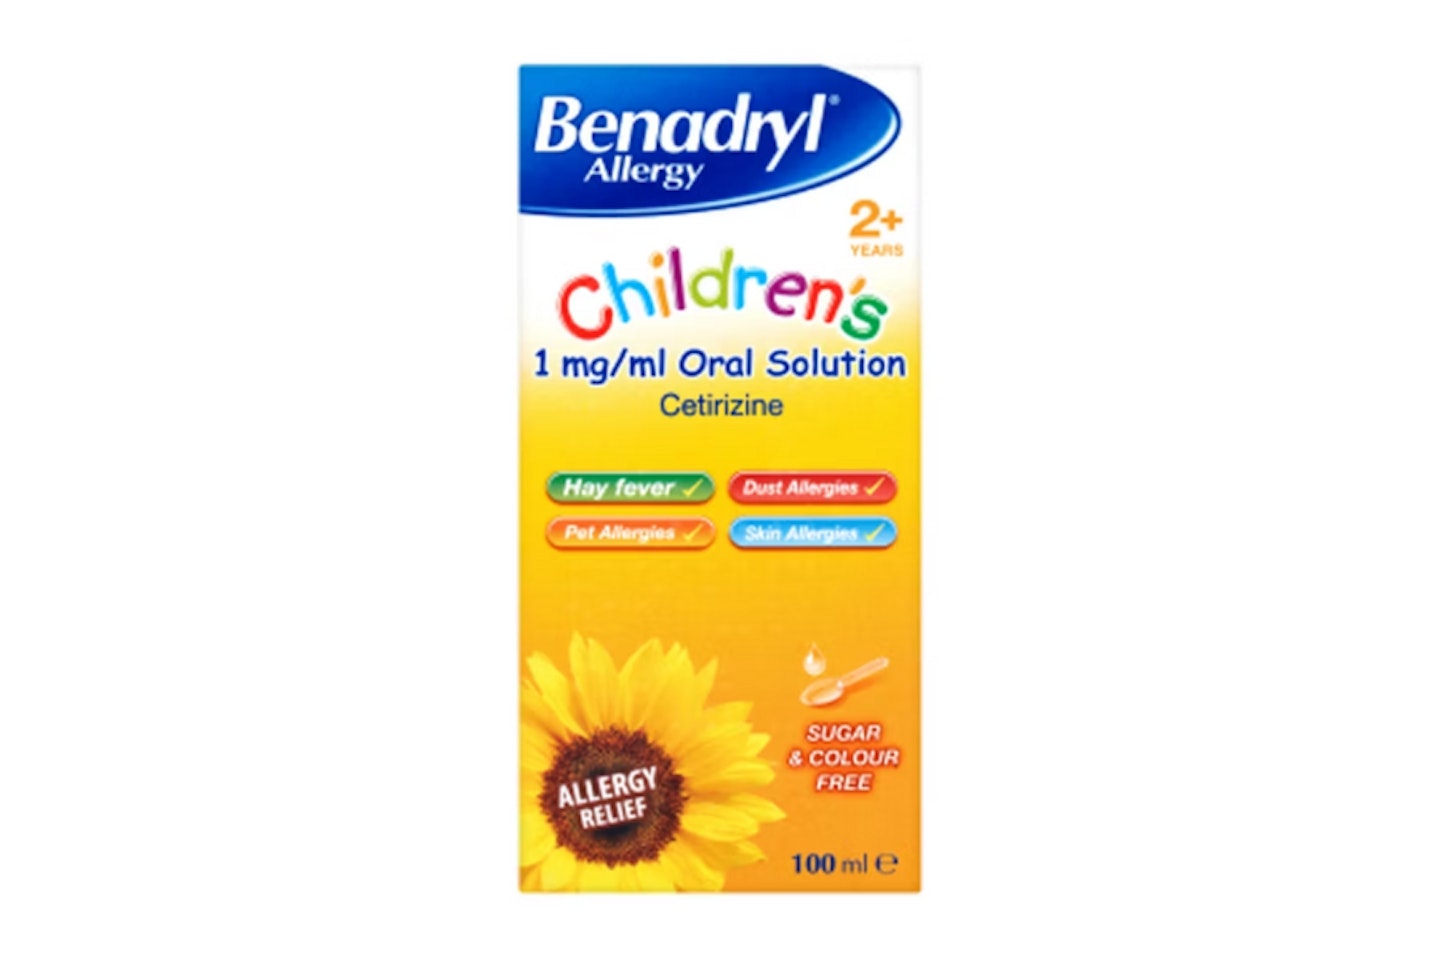 Benadryl Allergy Children's 1mg/ml Oral Solution